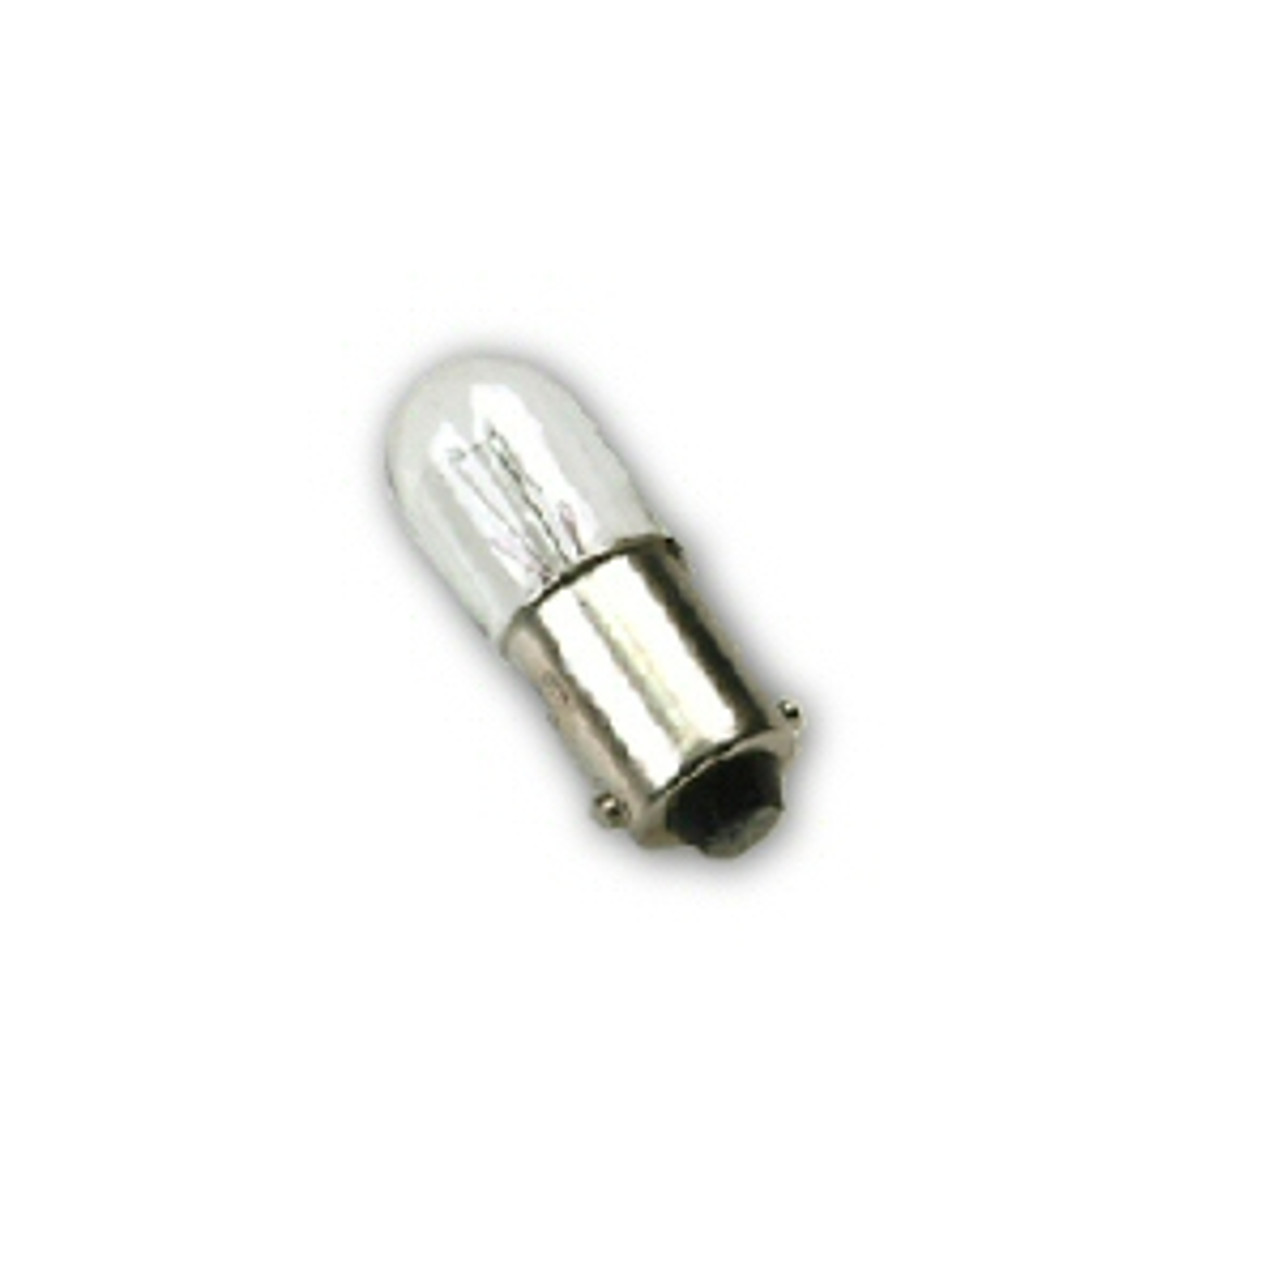 Miniature Lamp 44 - 6.3V, 0.25A Single Contact Mini Bayonet Base